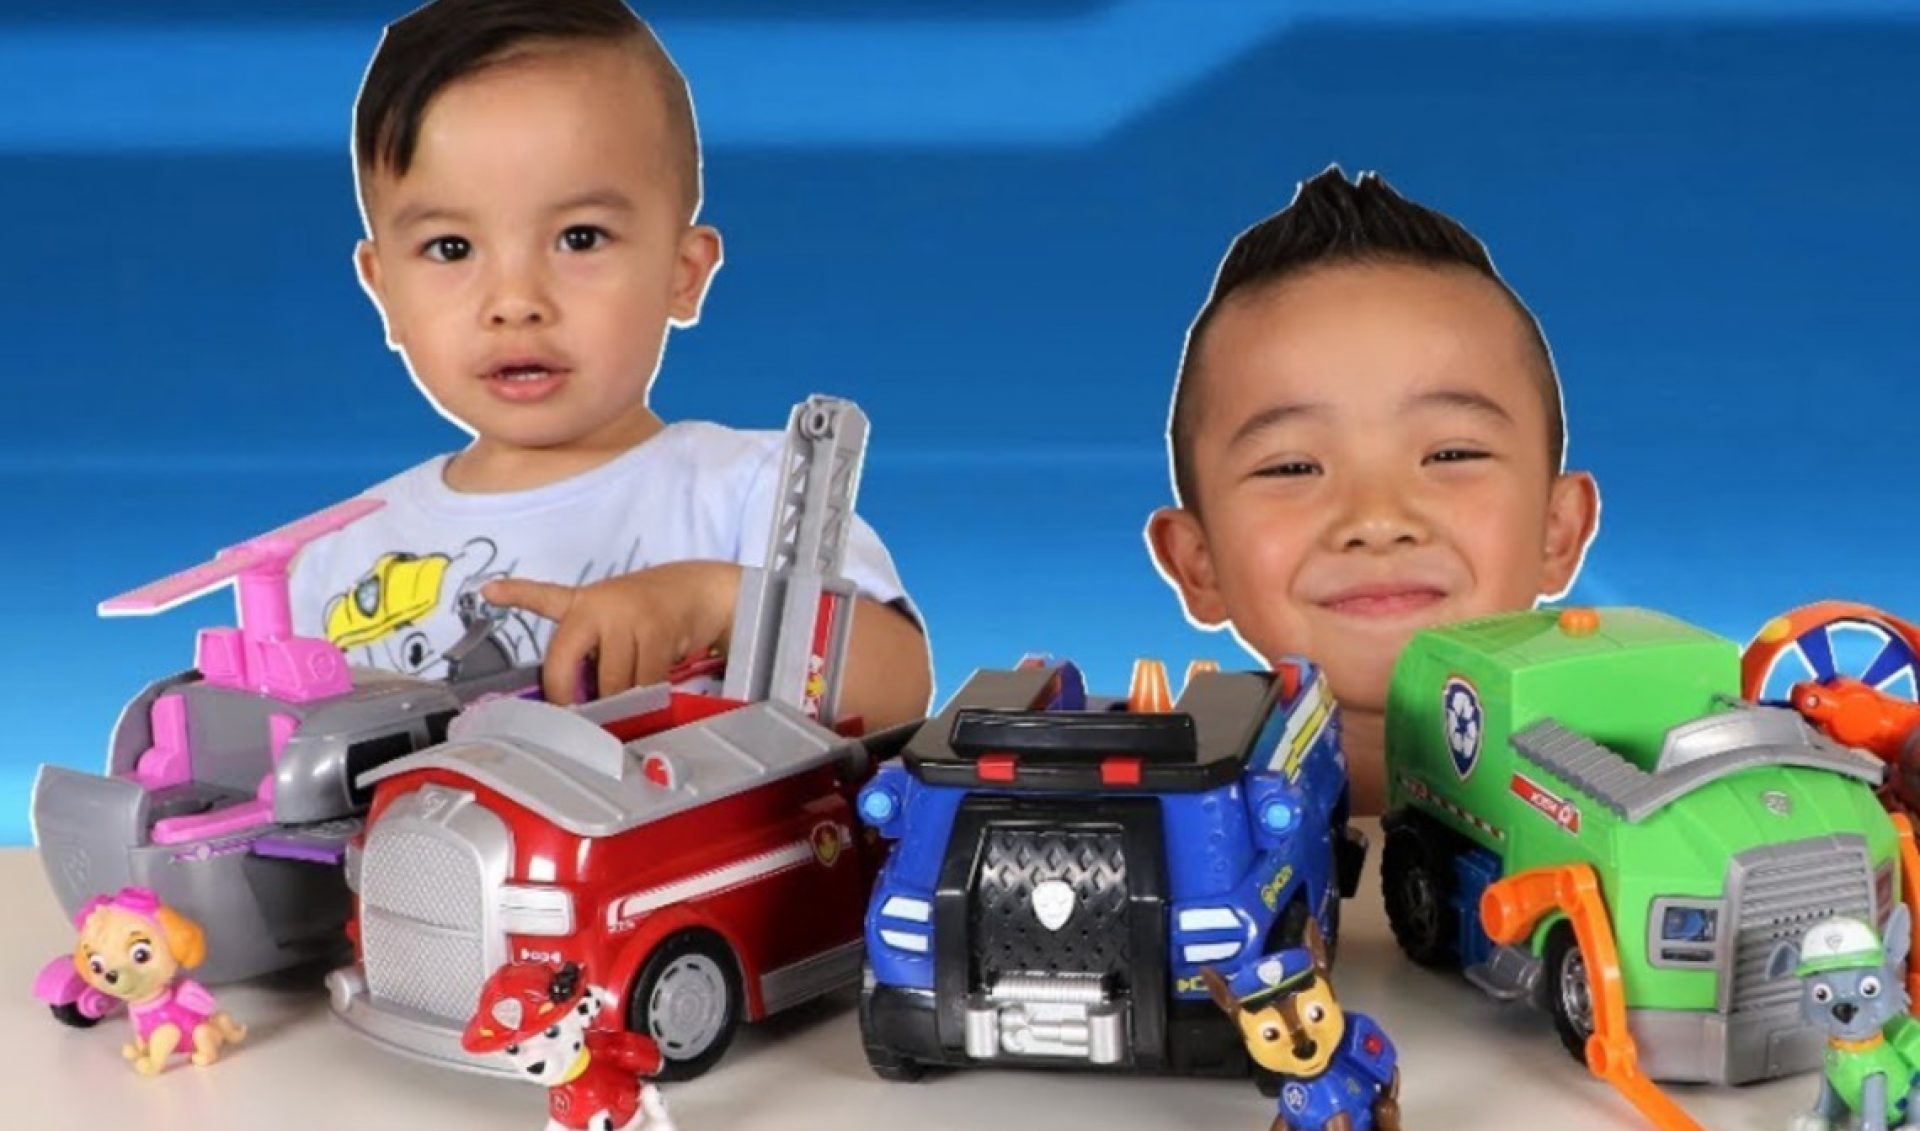 Children’s YouTube Giant ‘CKN Toys’ To Drop Toy Line, Nickelodeon Series Next Spring